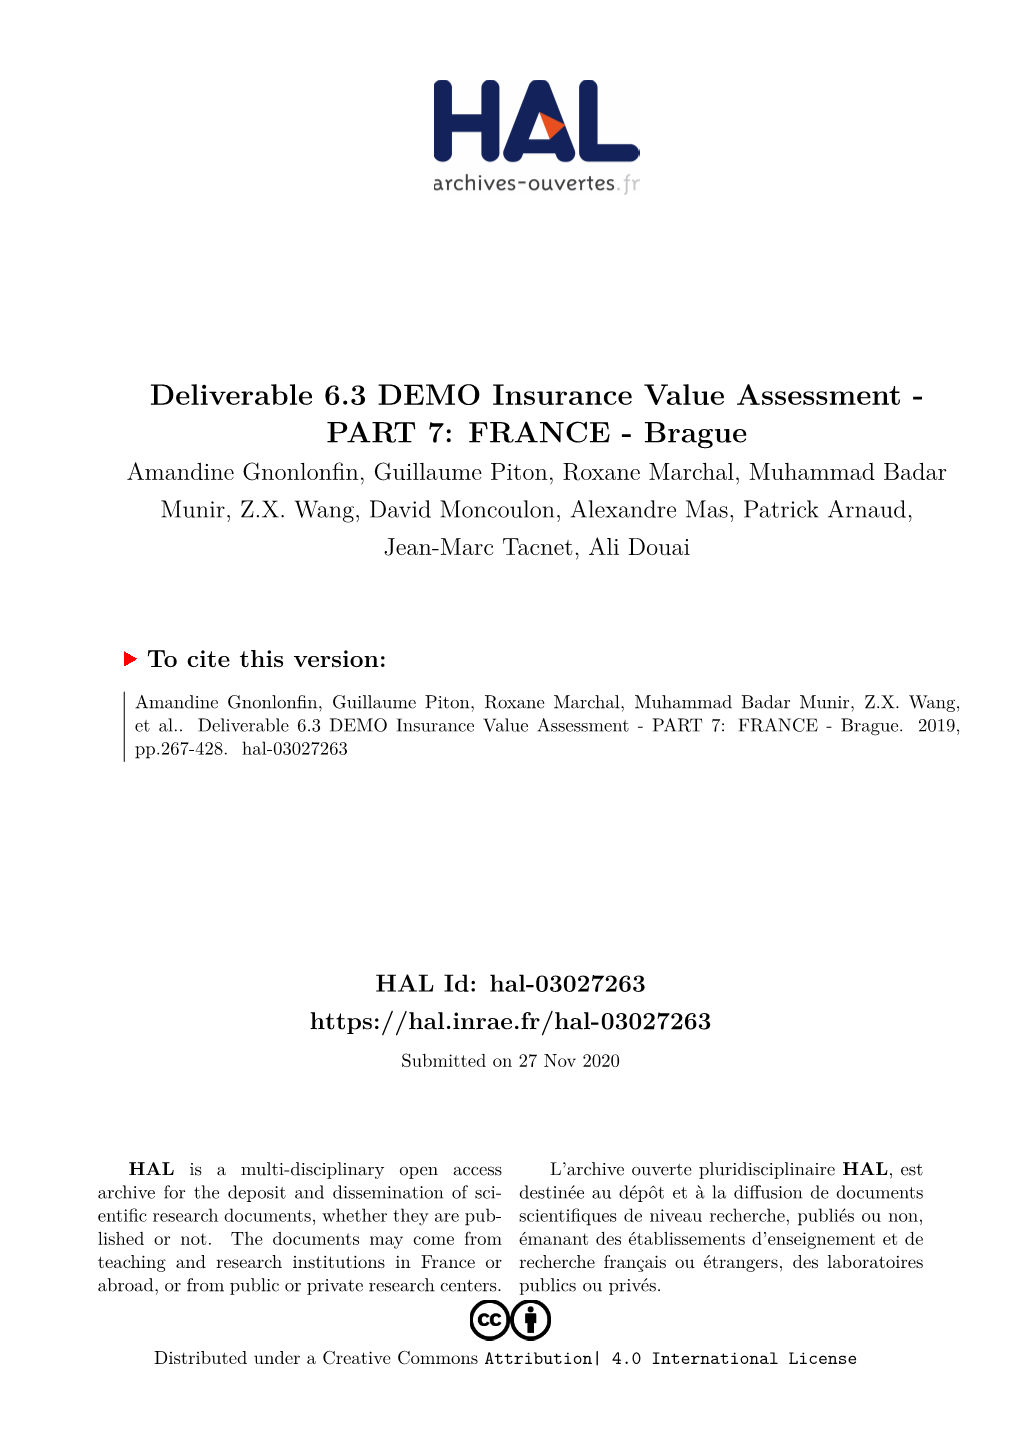 Deliverable 6.3 DEMO Insurance Value Assessment - PART 7: FRANCE - Brague Amandine Gnonlonfin, Guillaume Piton, Roxane Marchal, Muhammad Badar Munir, Z.X